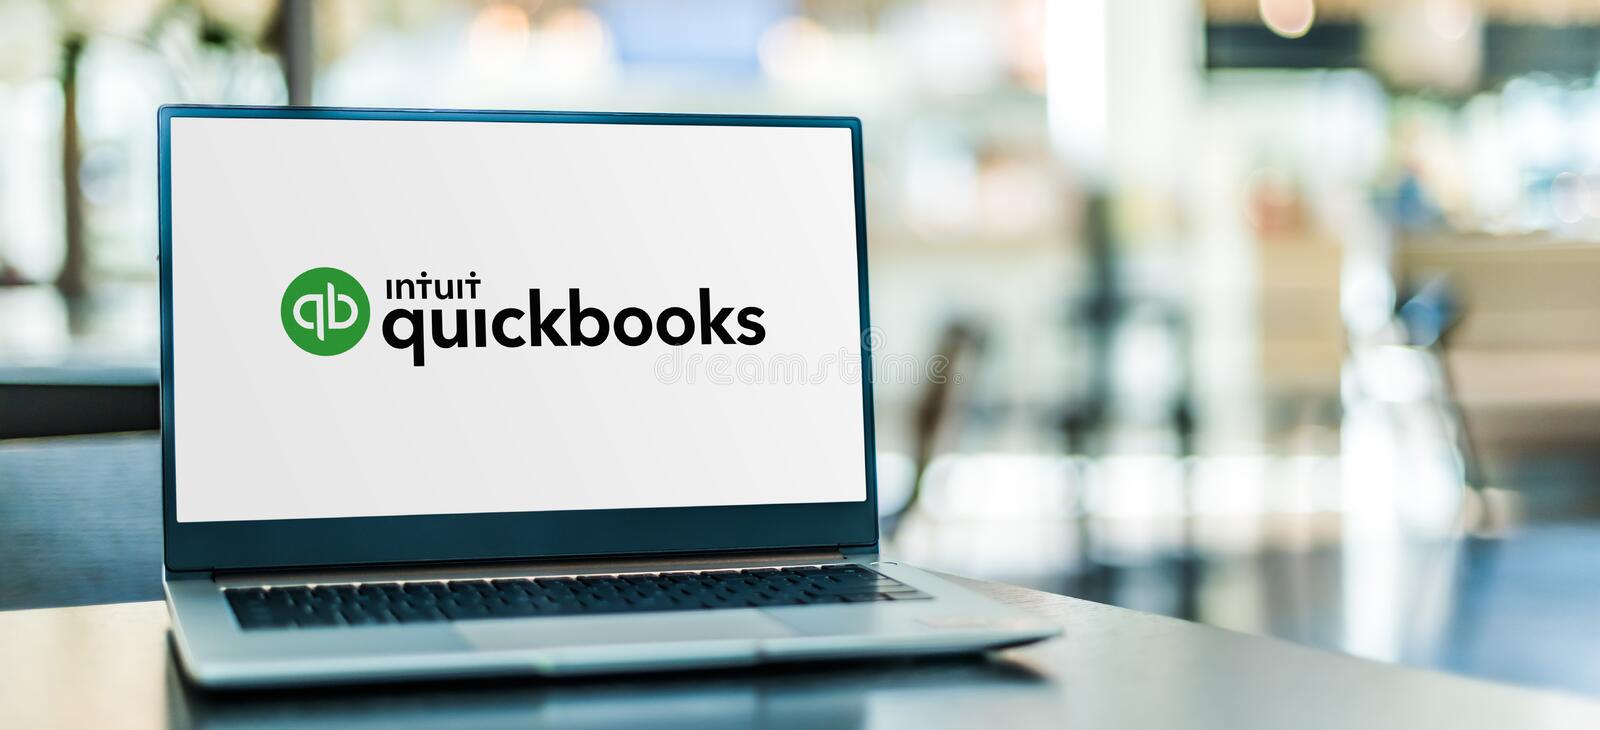 Computerized accounting using QuickBooks